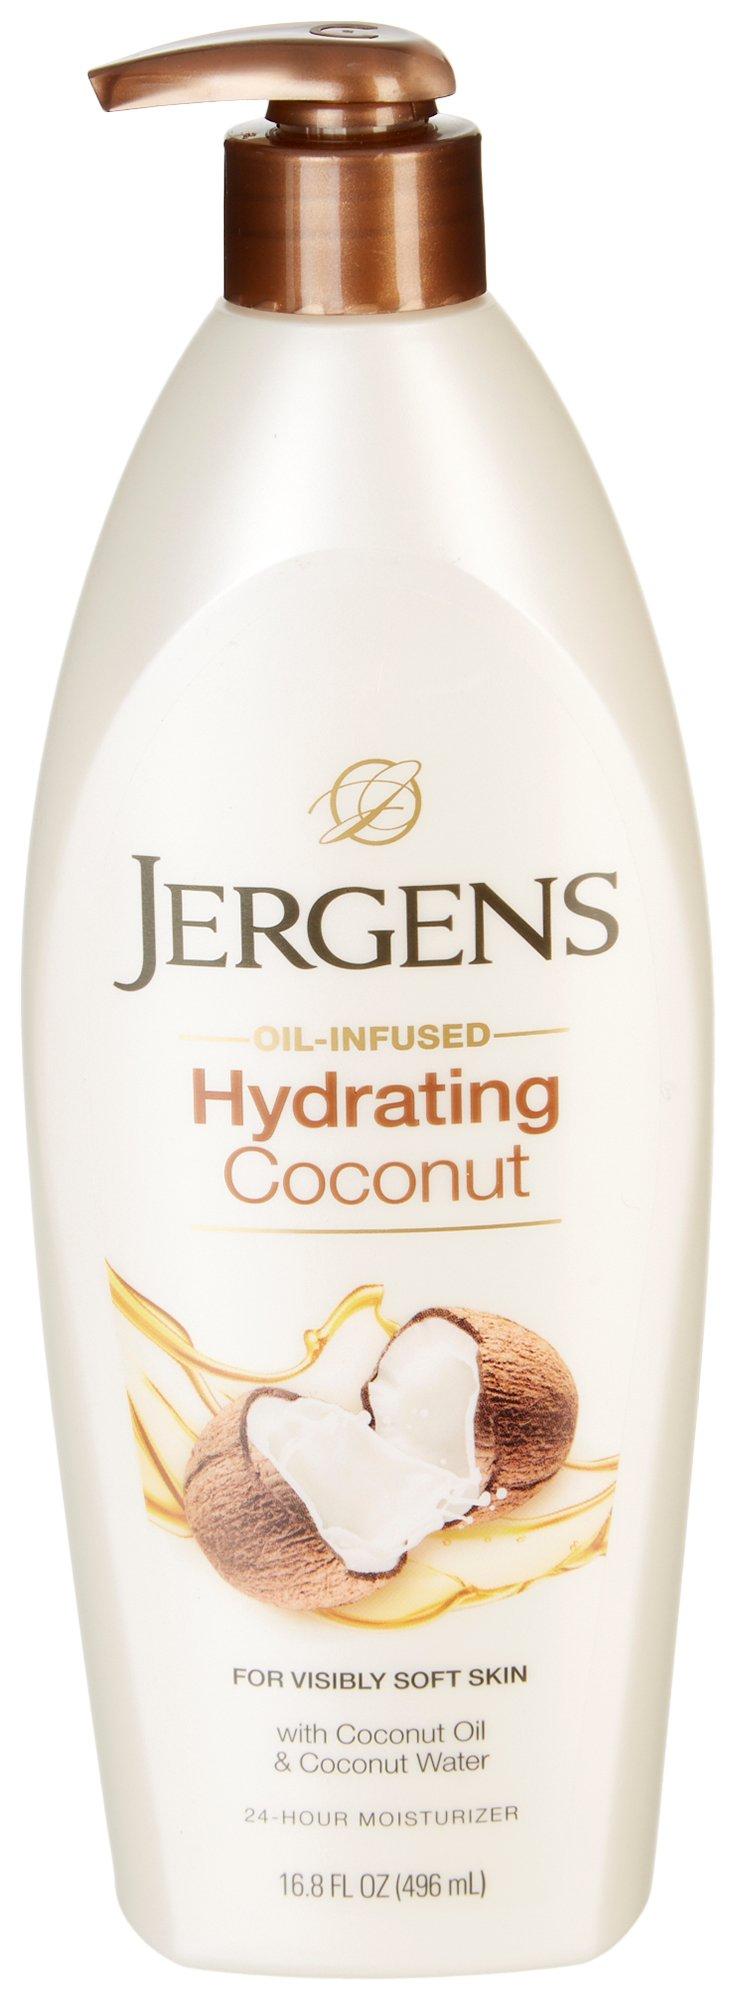 Oil-Infused Hydrating Coconut Skin Moisturizer